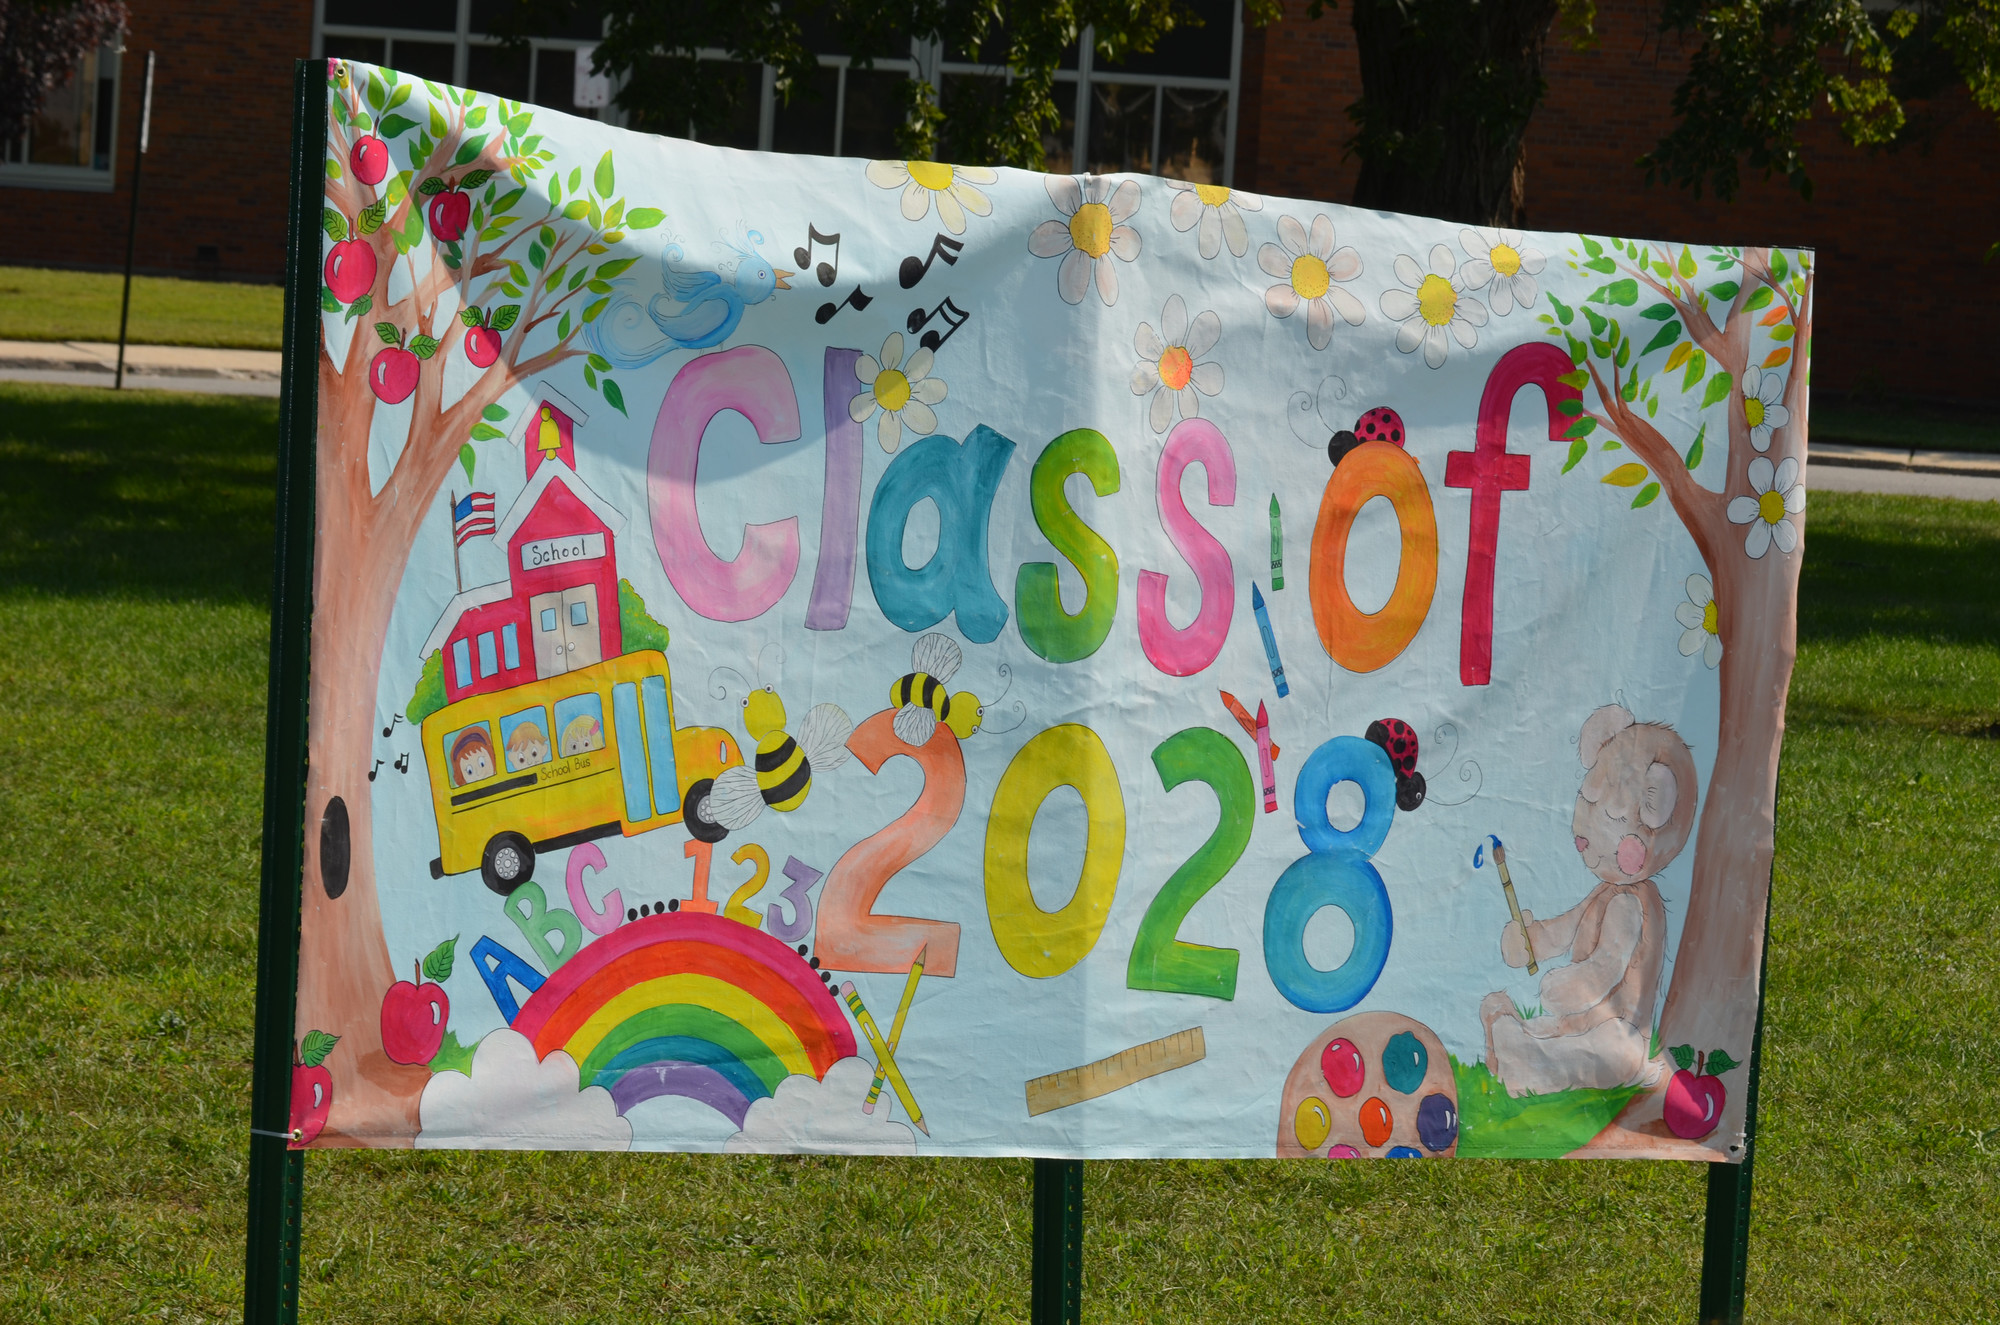 Bowling Green art teacher Danielle Minuto designed this banner for the festivities last week.